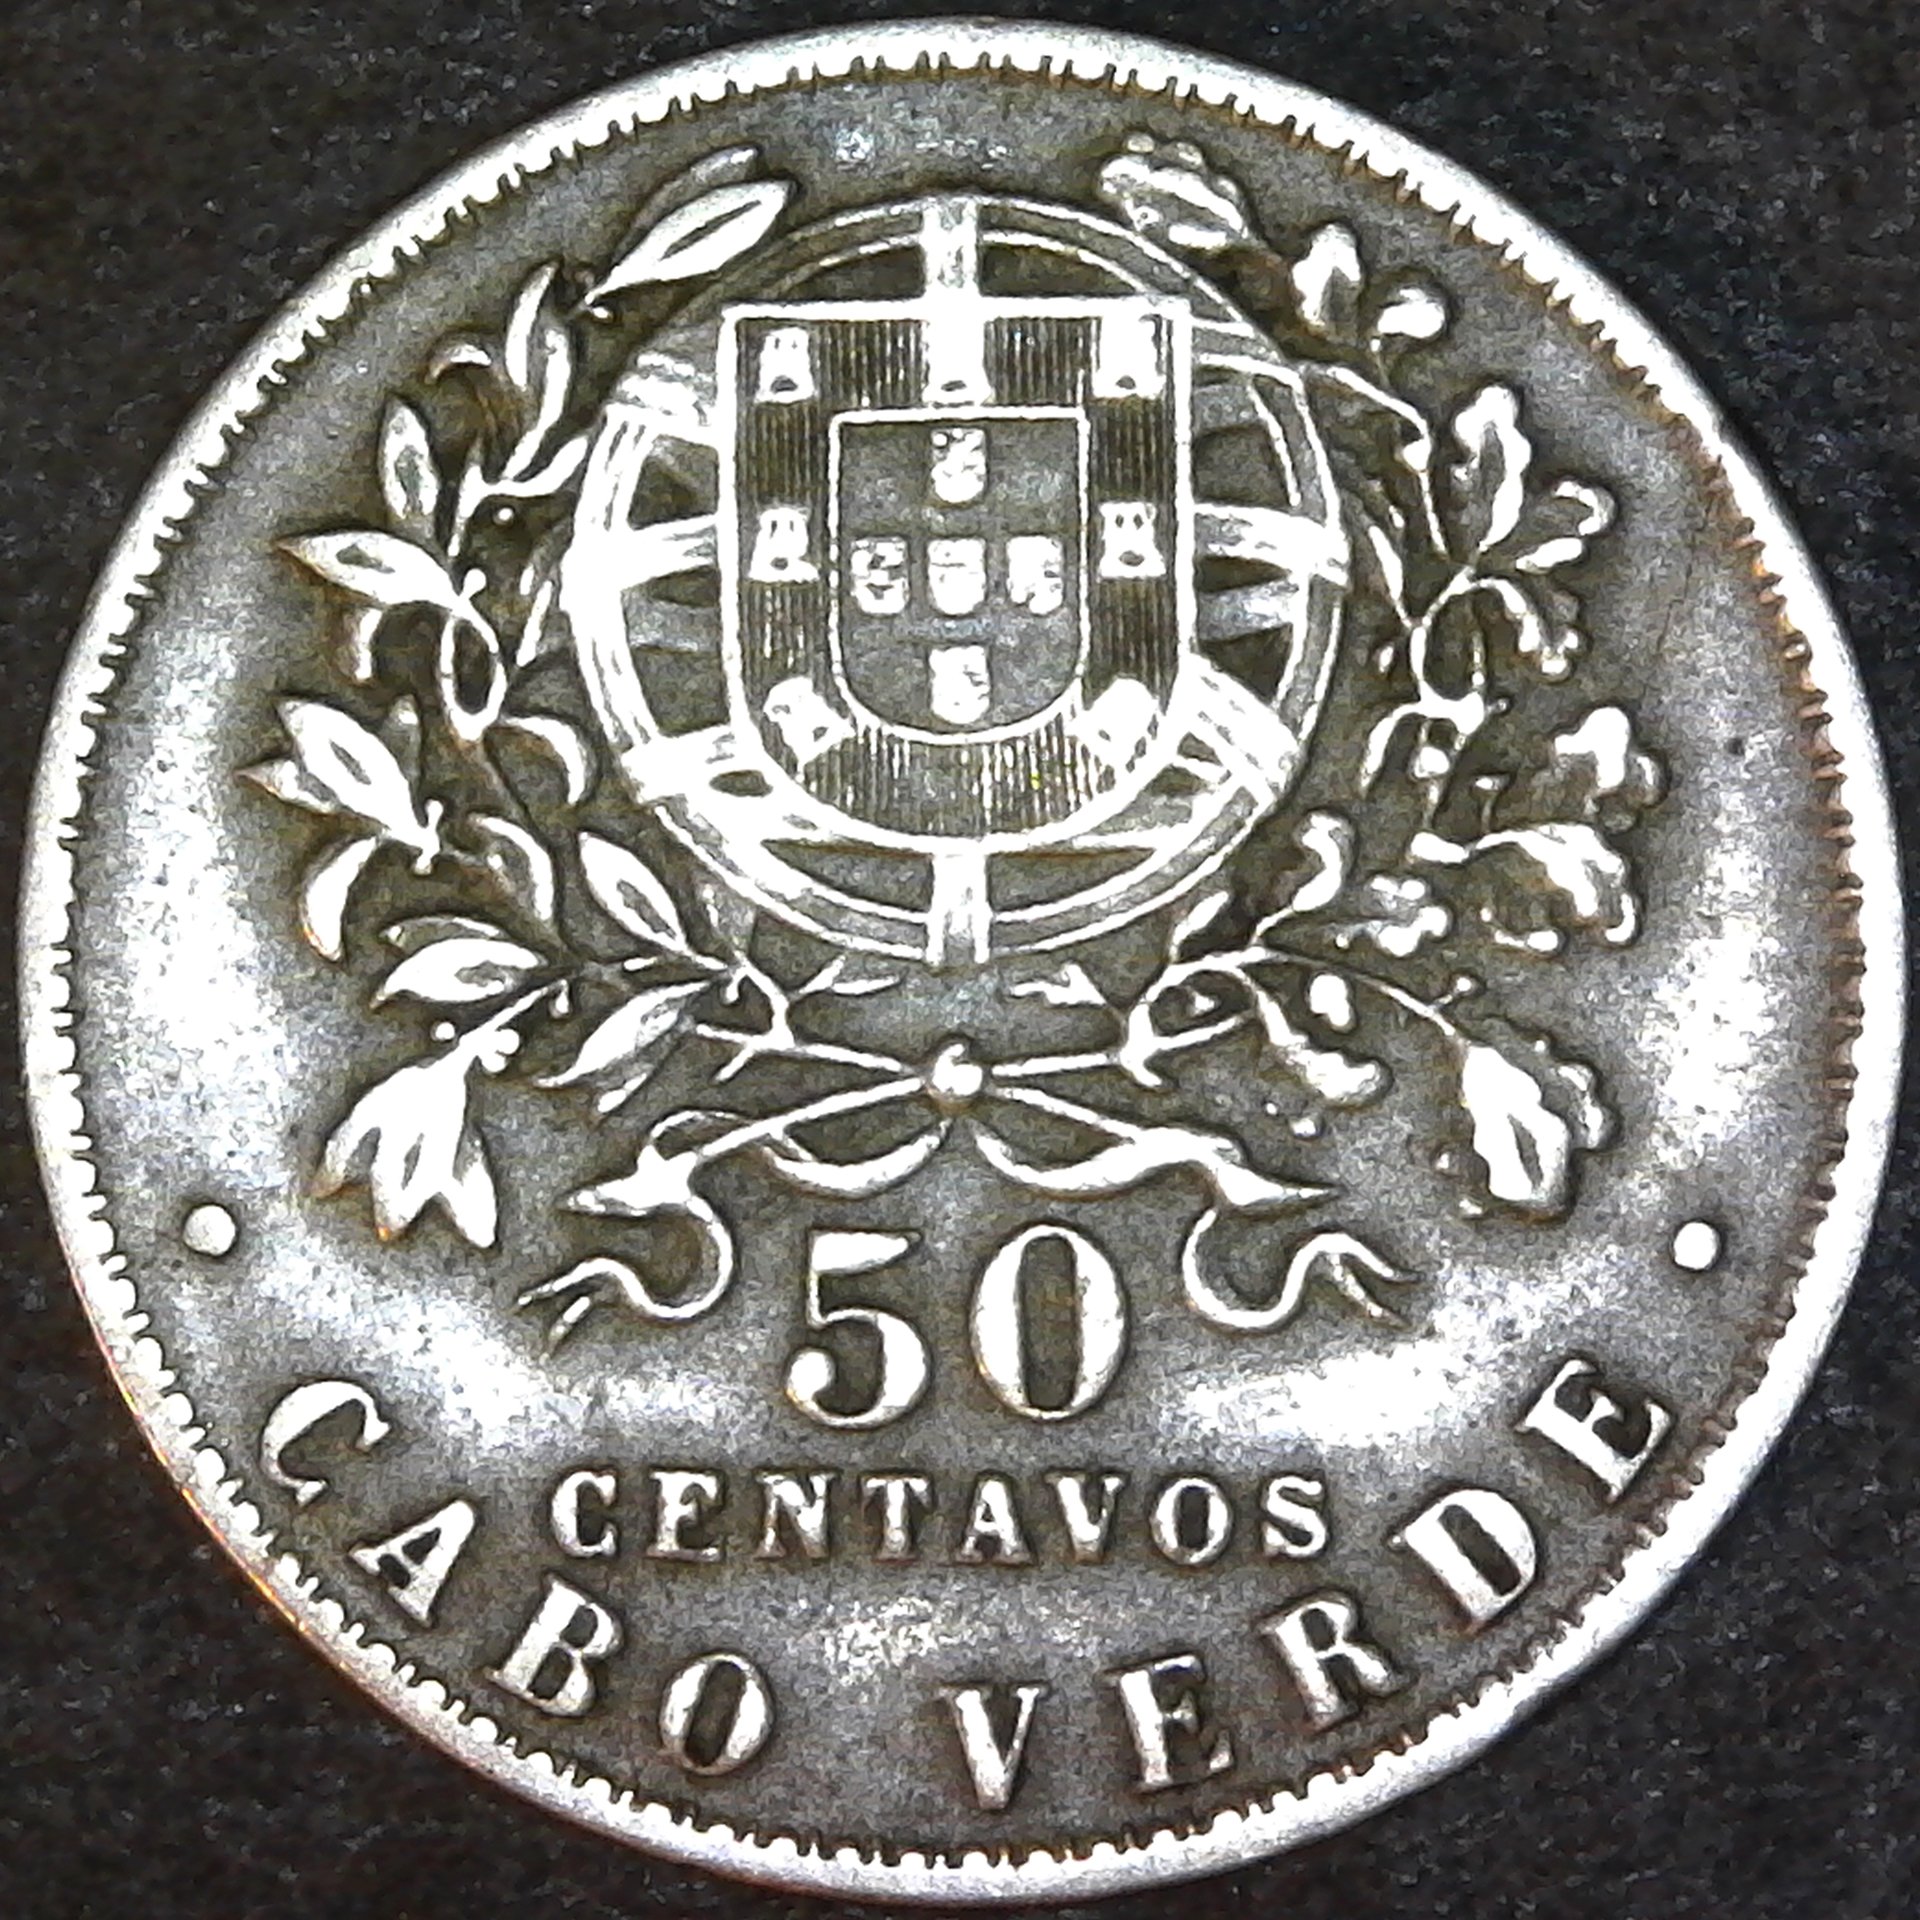 Cape Verde 50 centavos 1930 obv.jpg